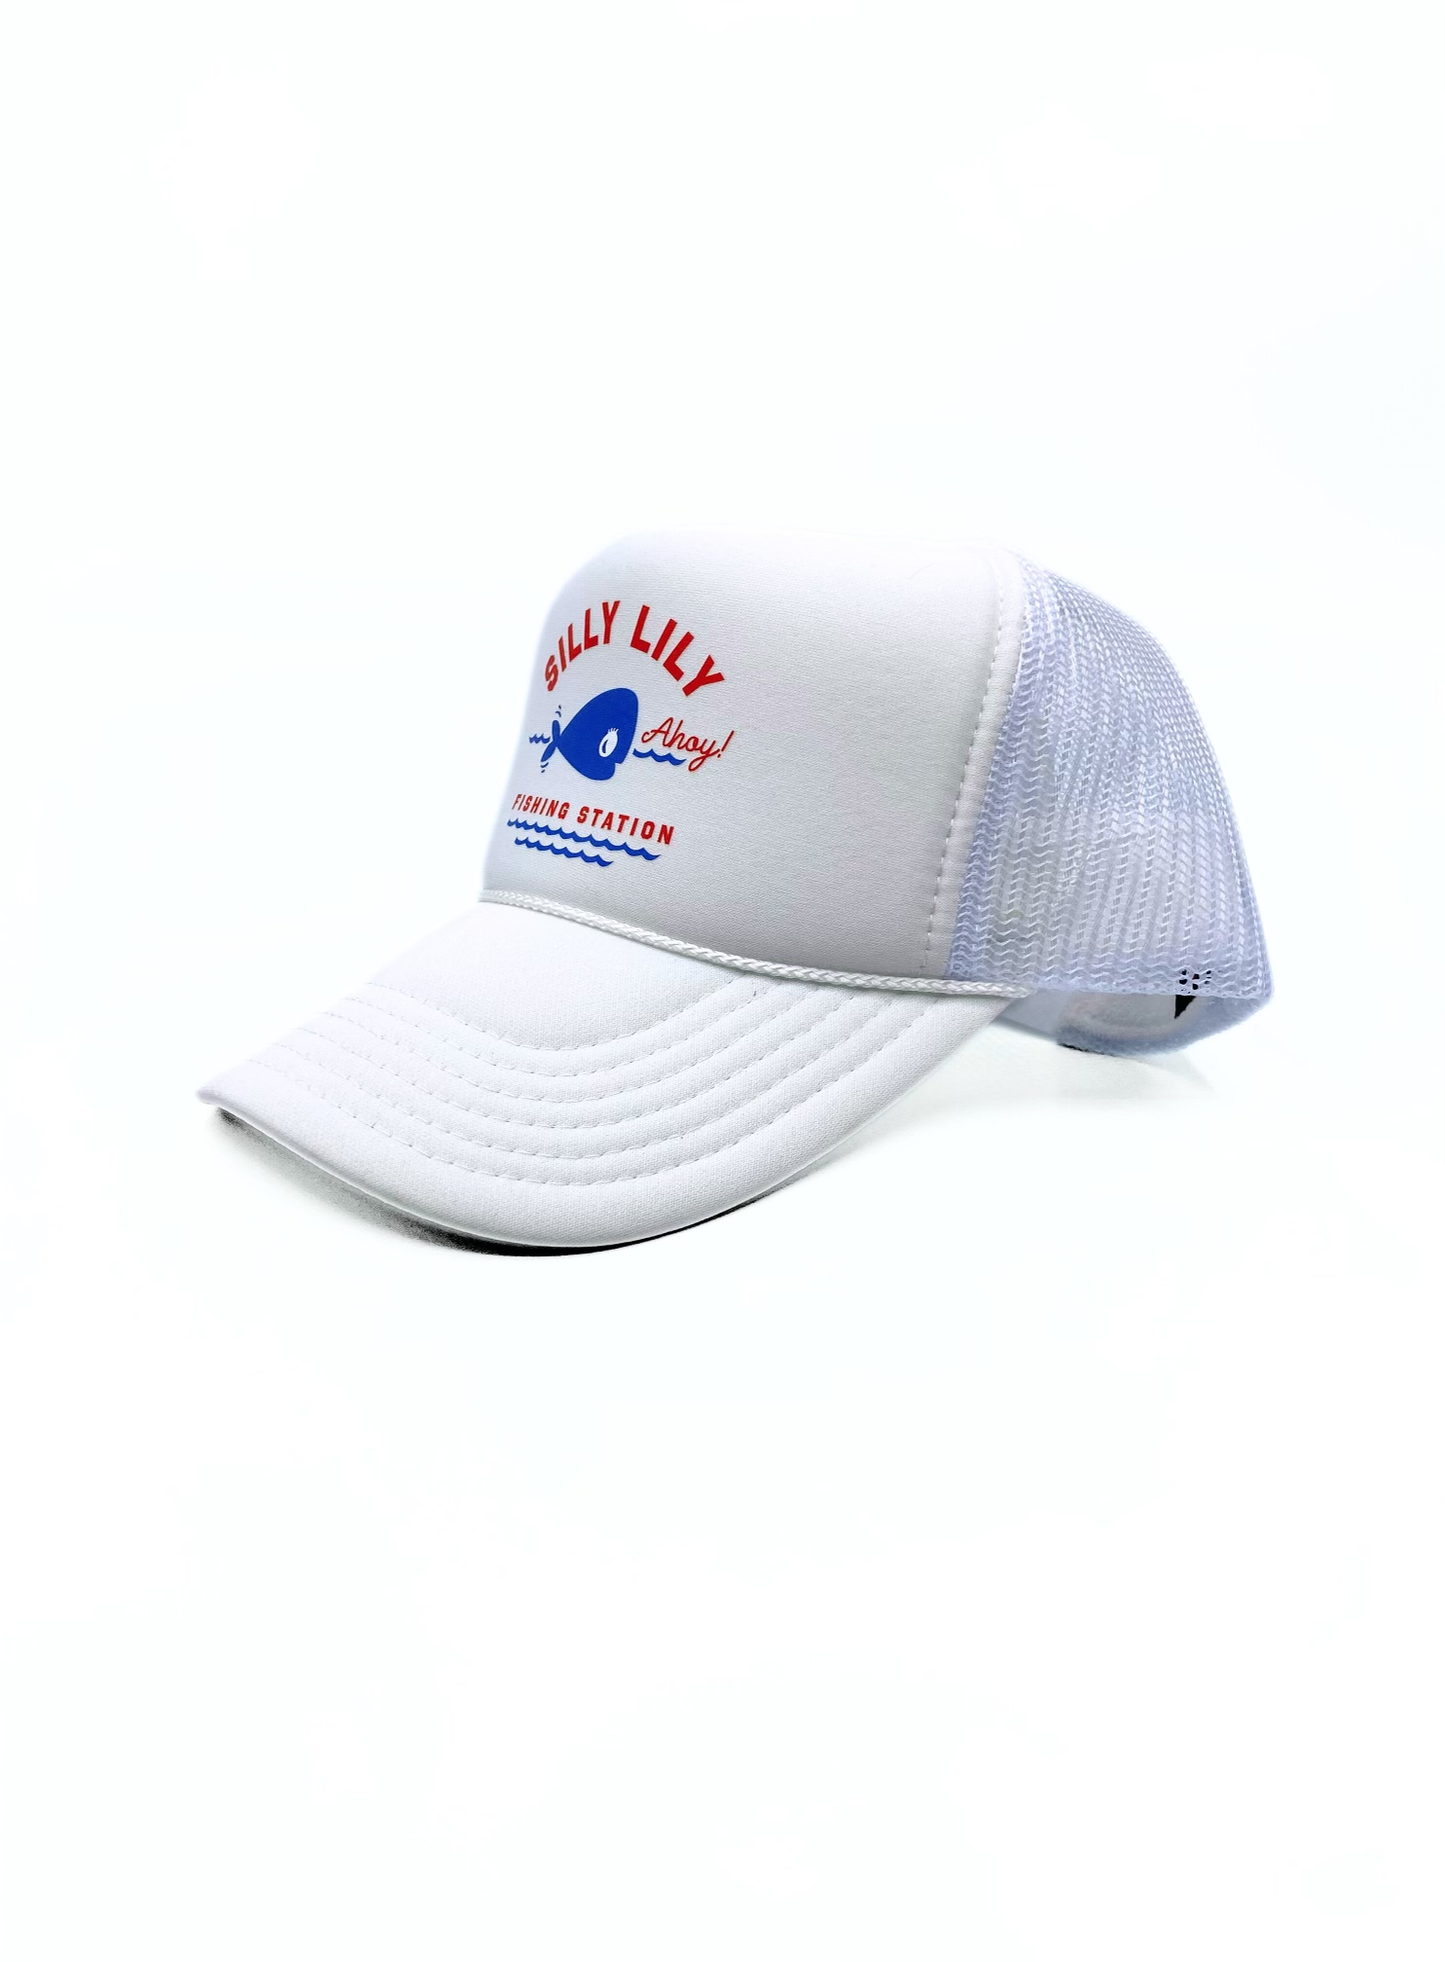 Amalfi Ahoy Hat